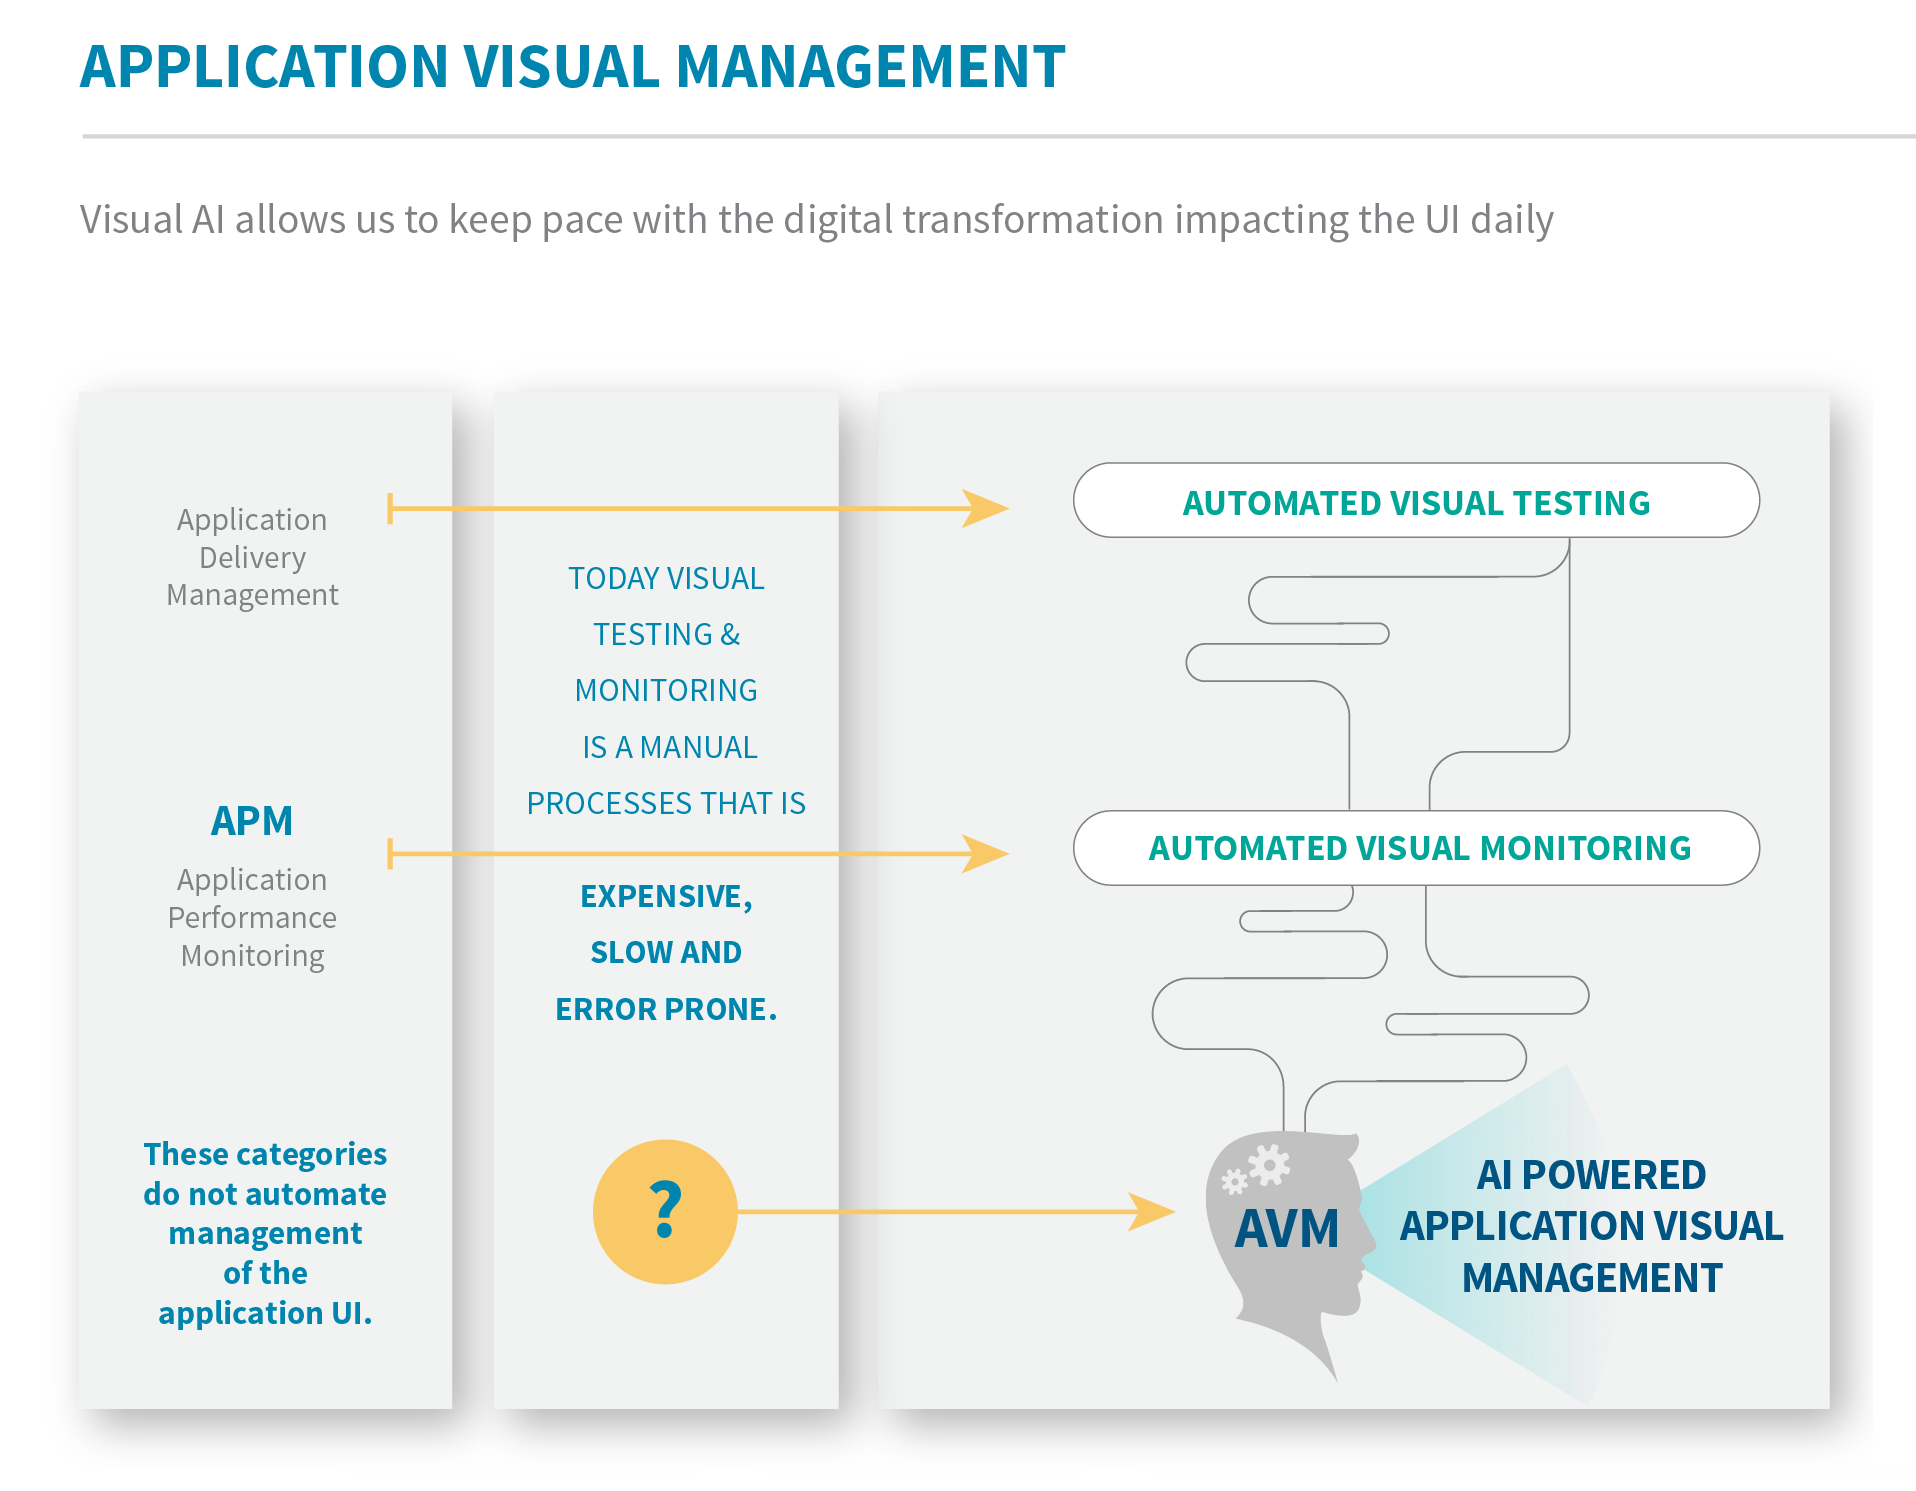 Application Visual Management (AVM)